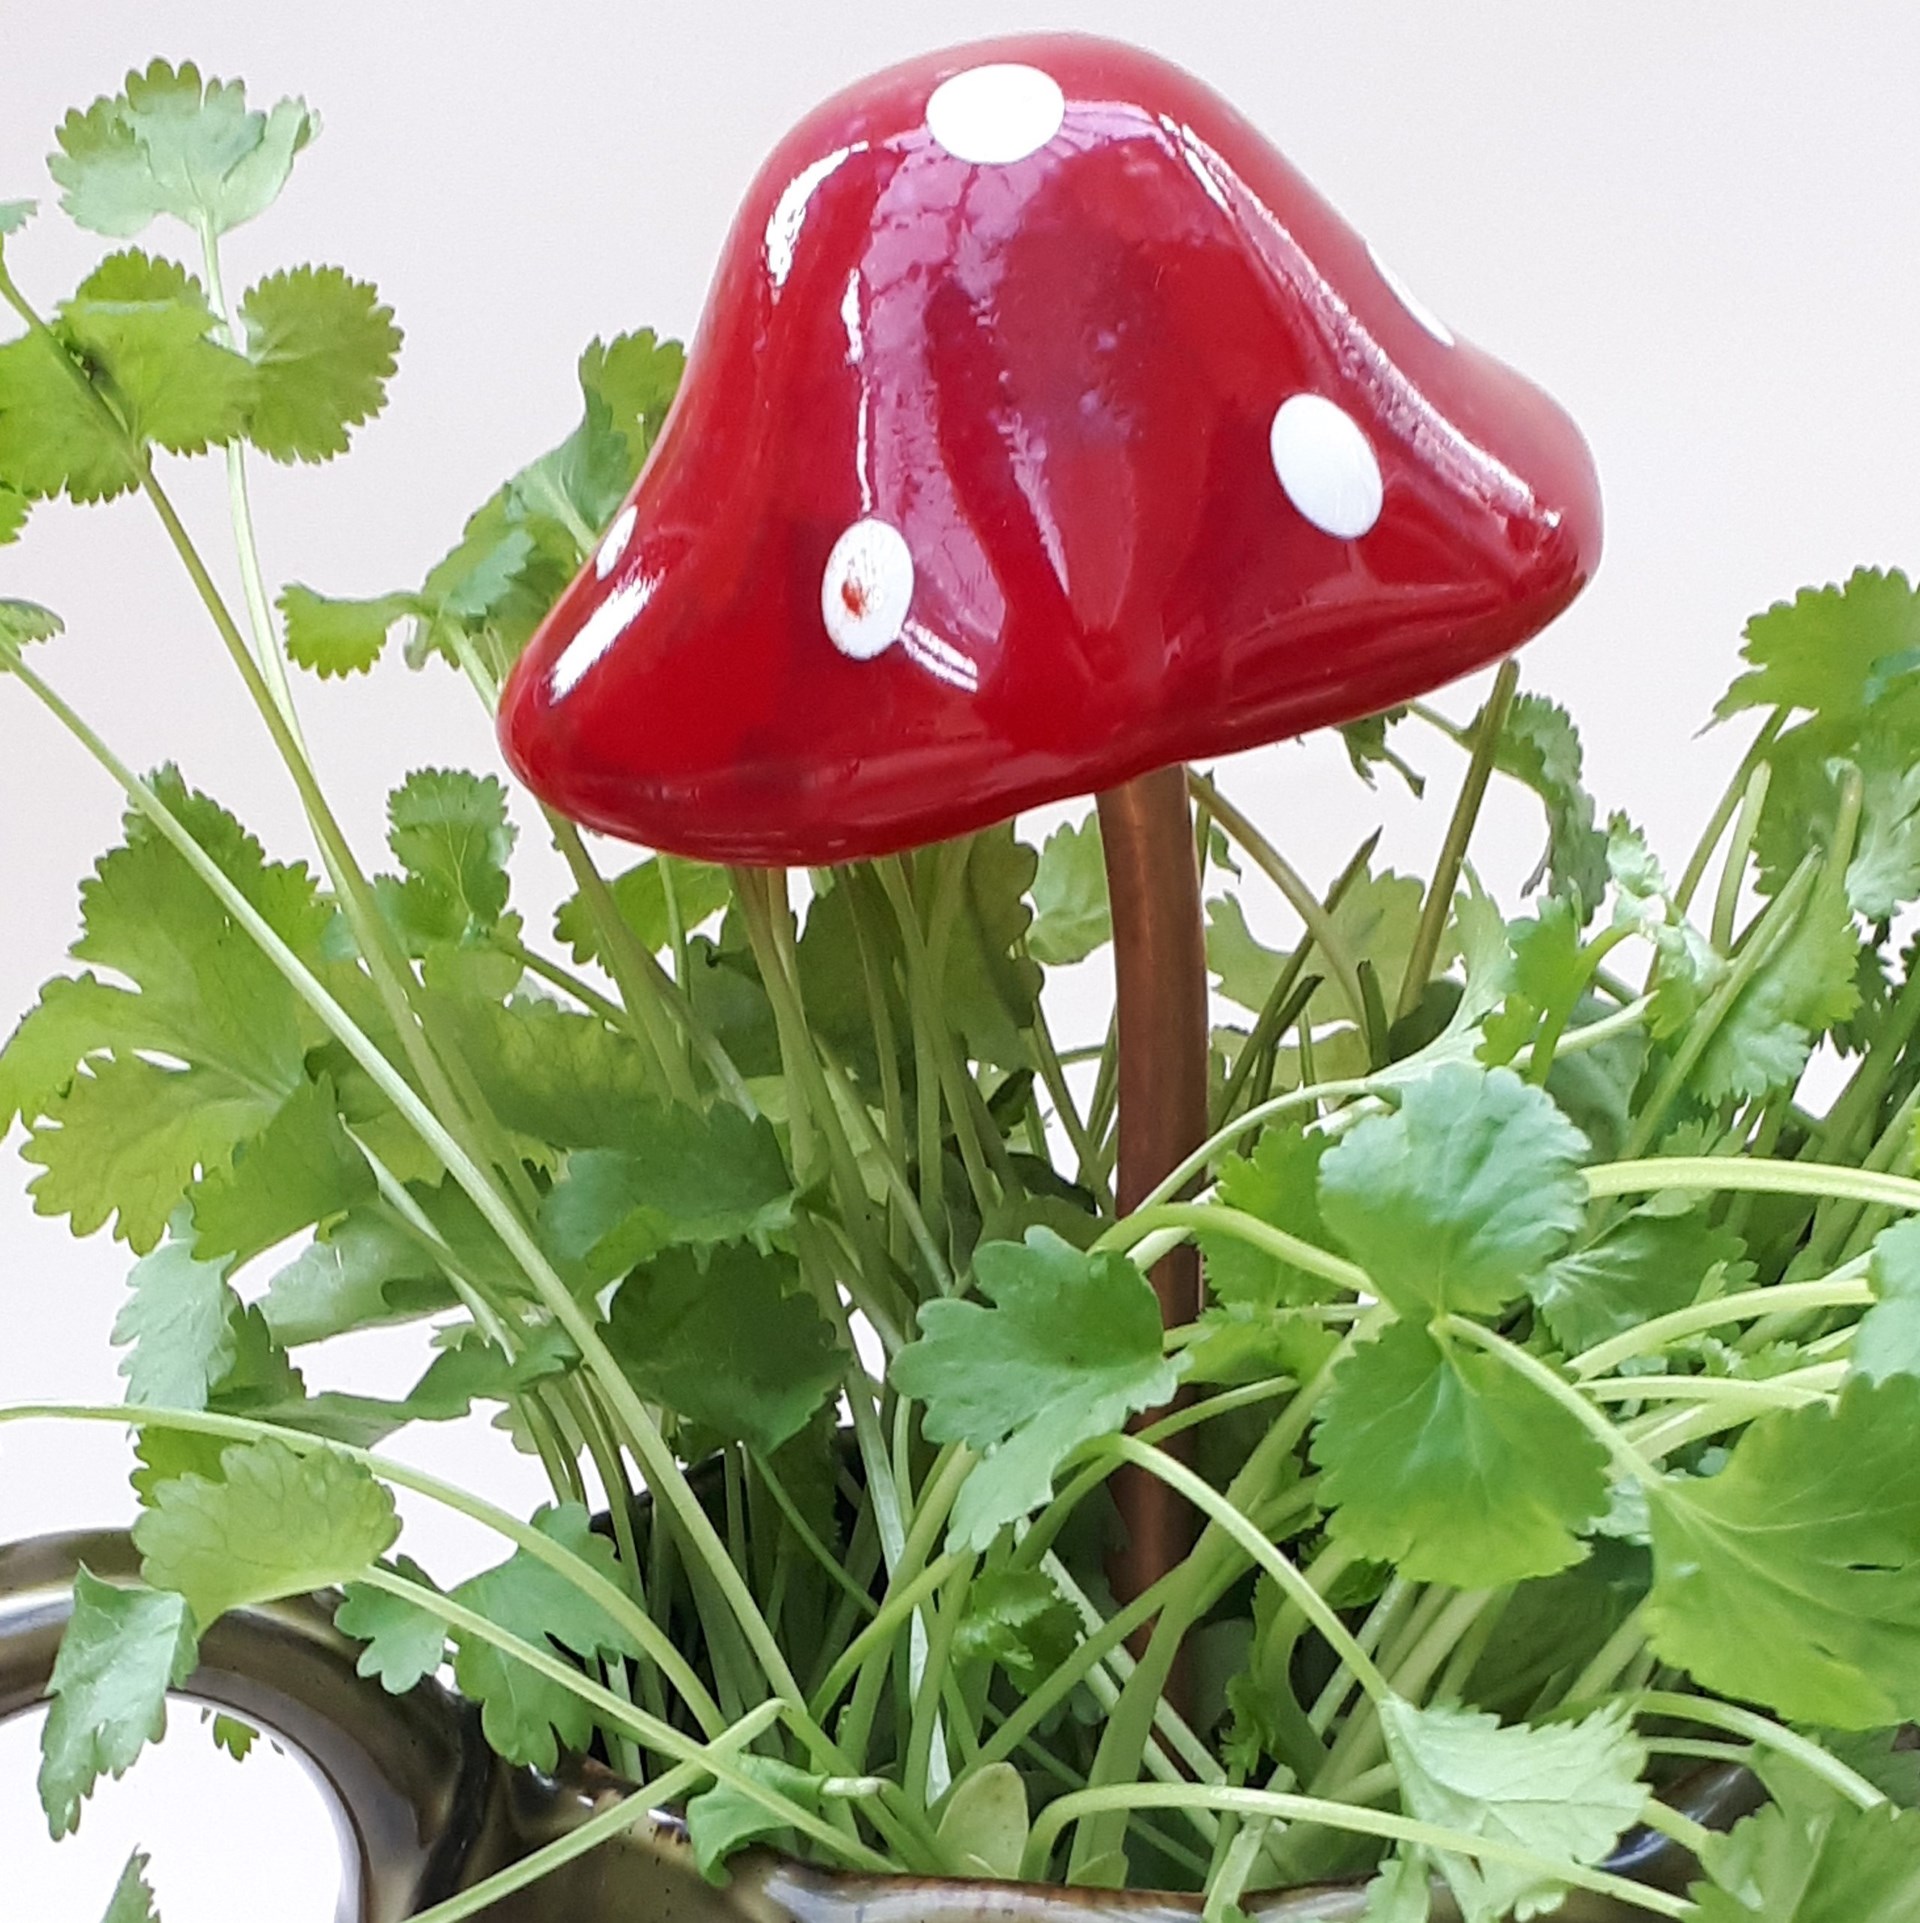 Mushroom in a jug